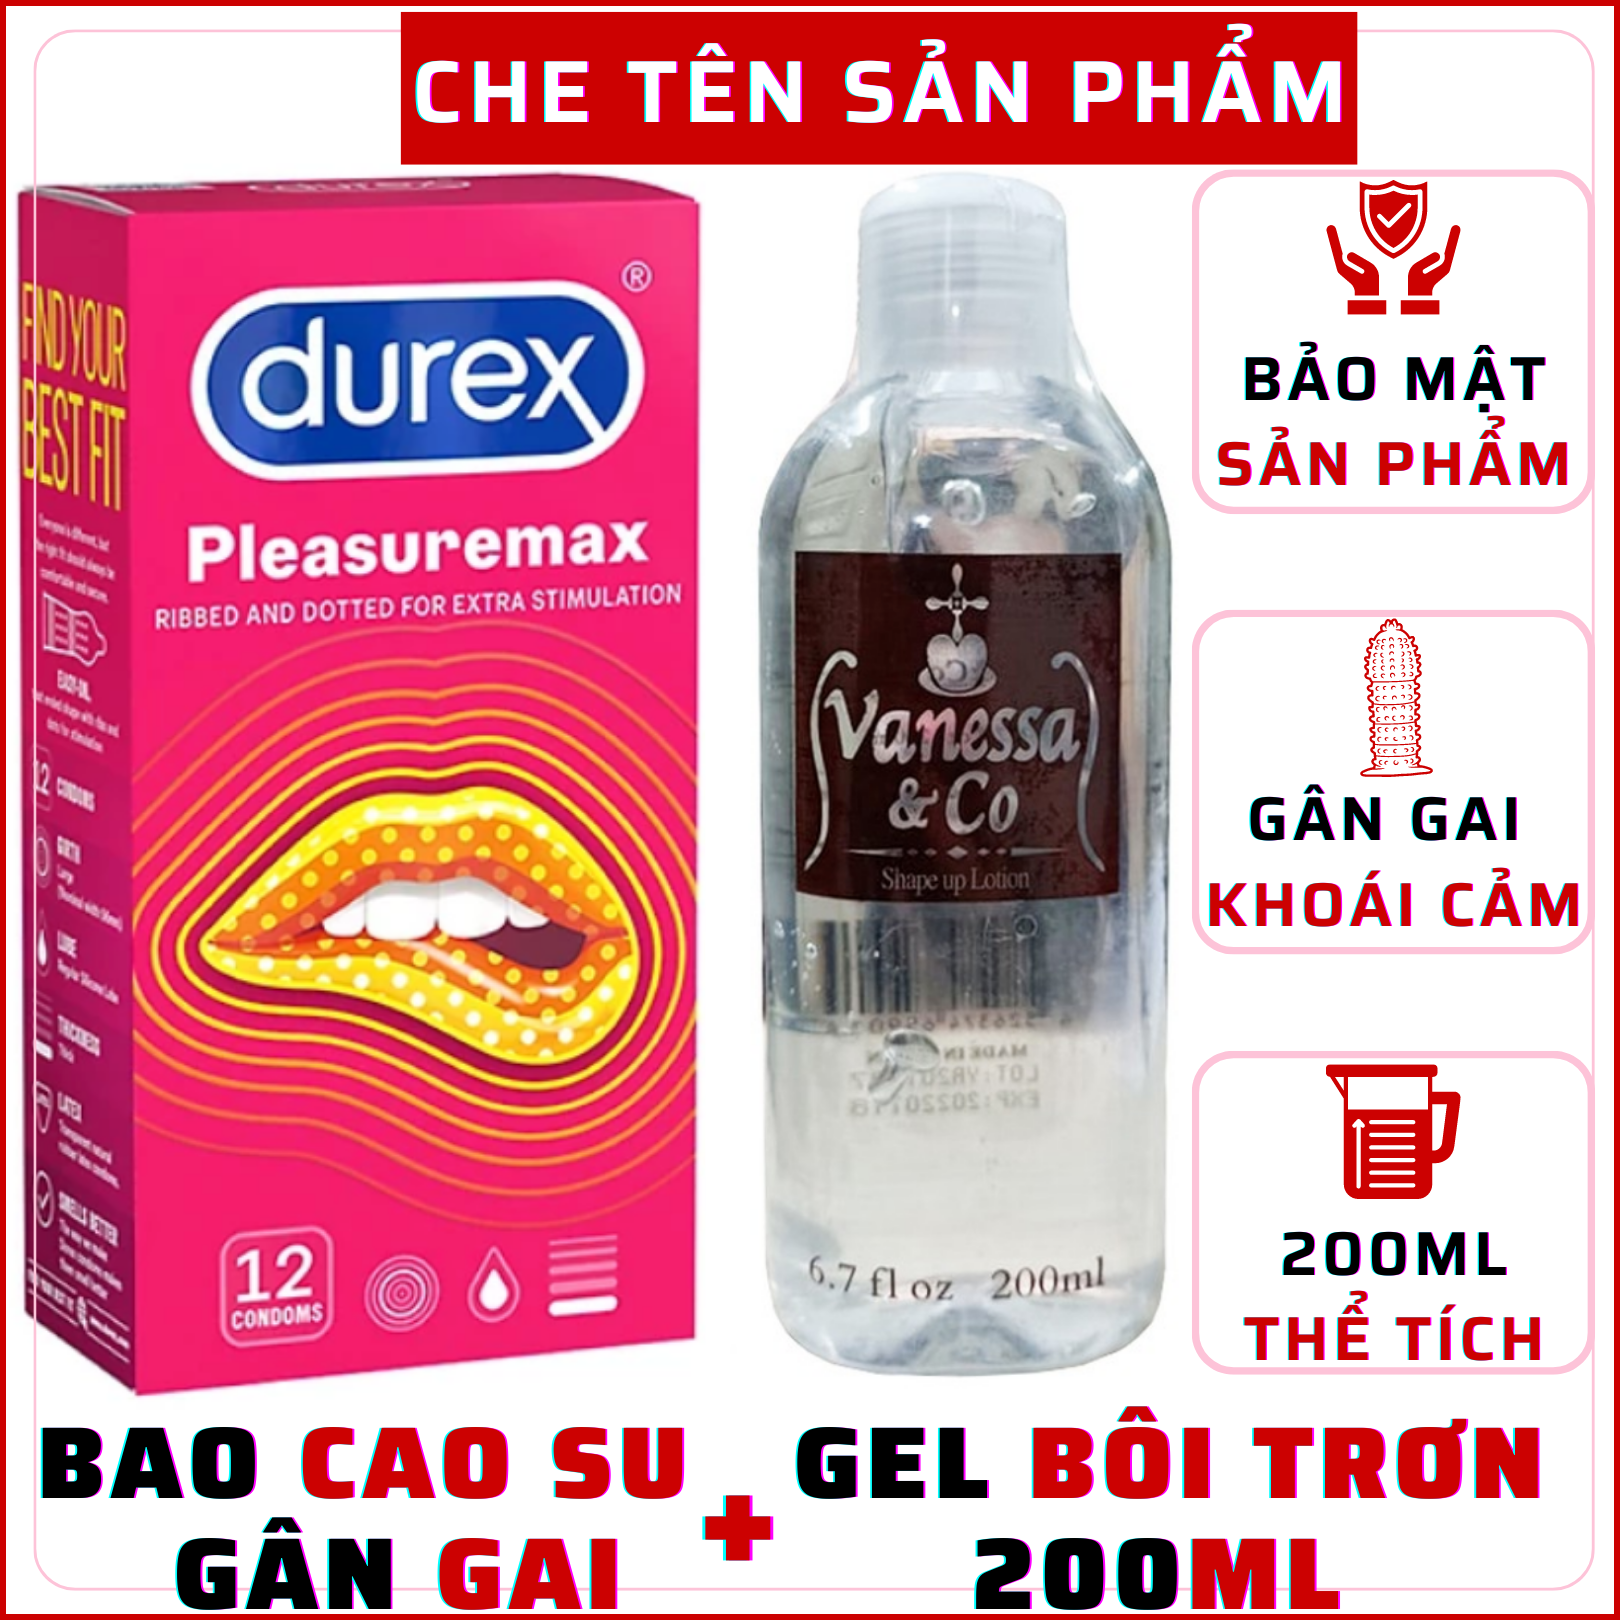 Combo BAO CAO SU gân gai tăng khoái cảm Durex Pleasuremax 12 bao và GEL